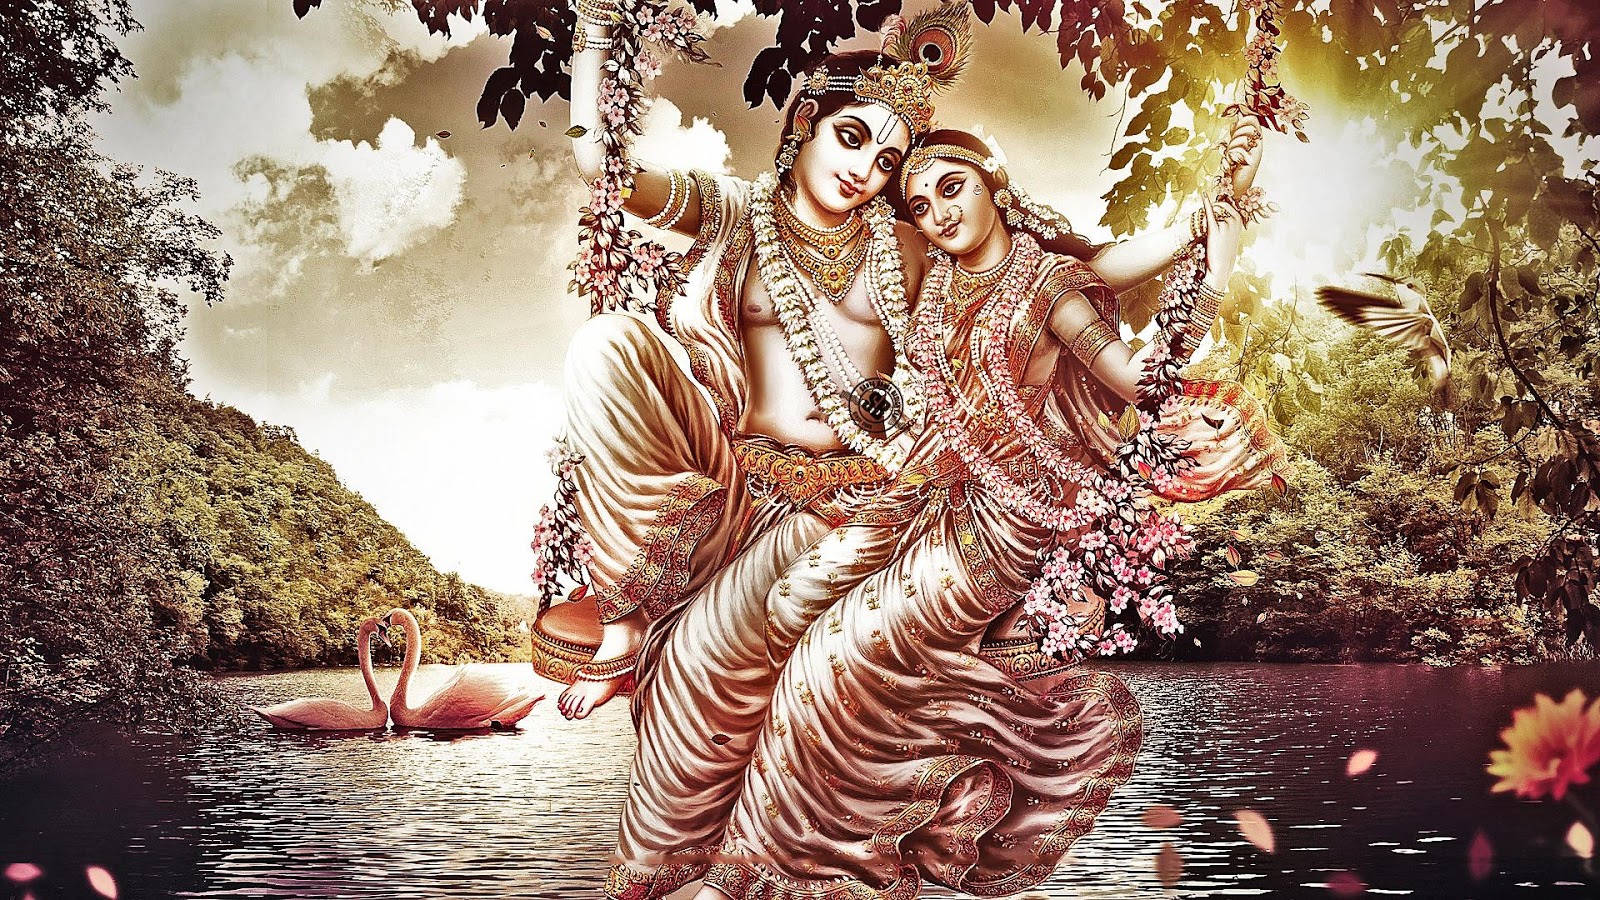 hindu god wallpaper full hd,water,cg artwork,mythology,illustration,tree